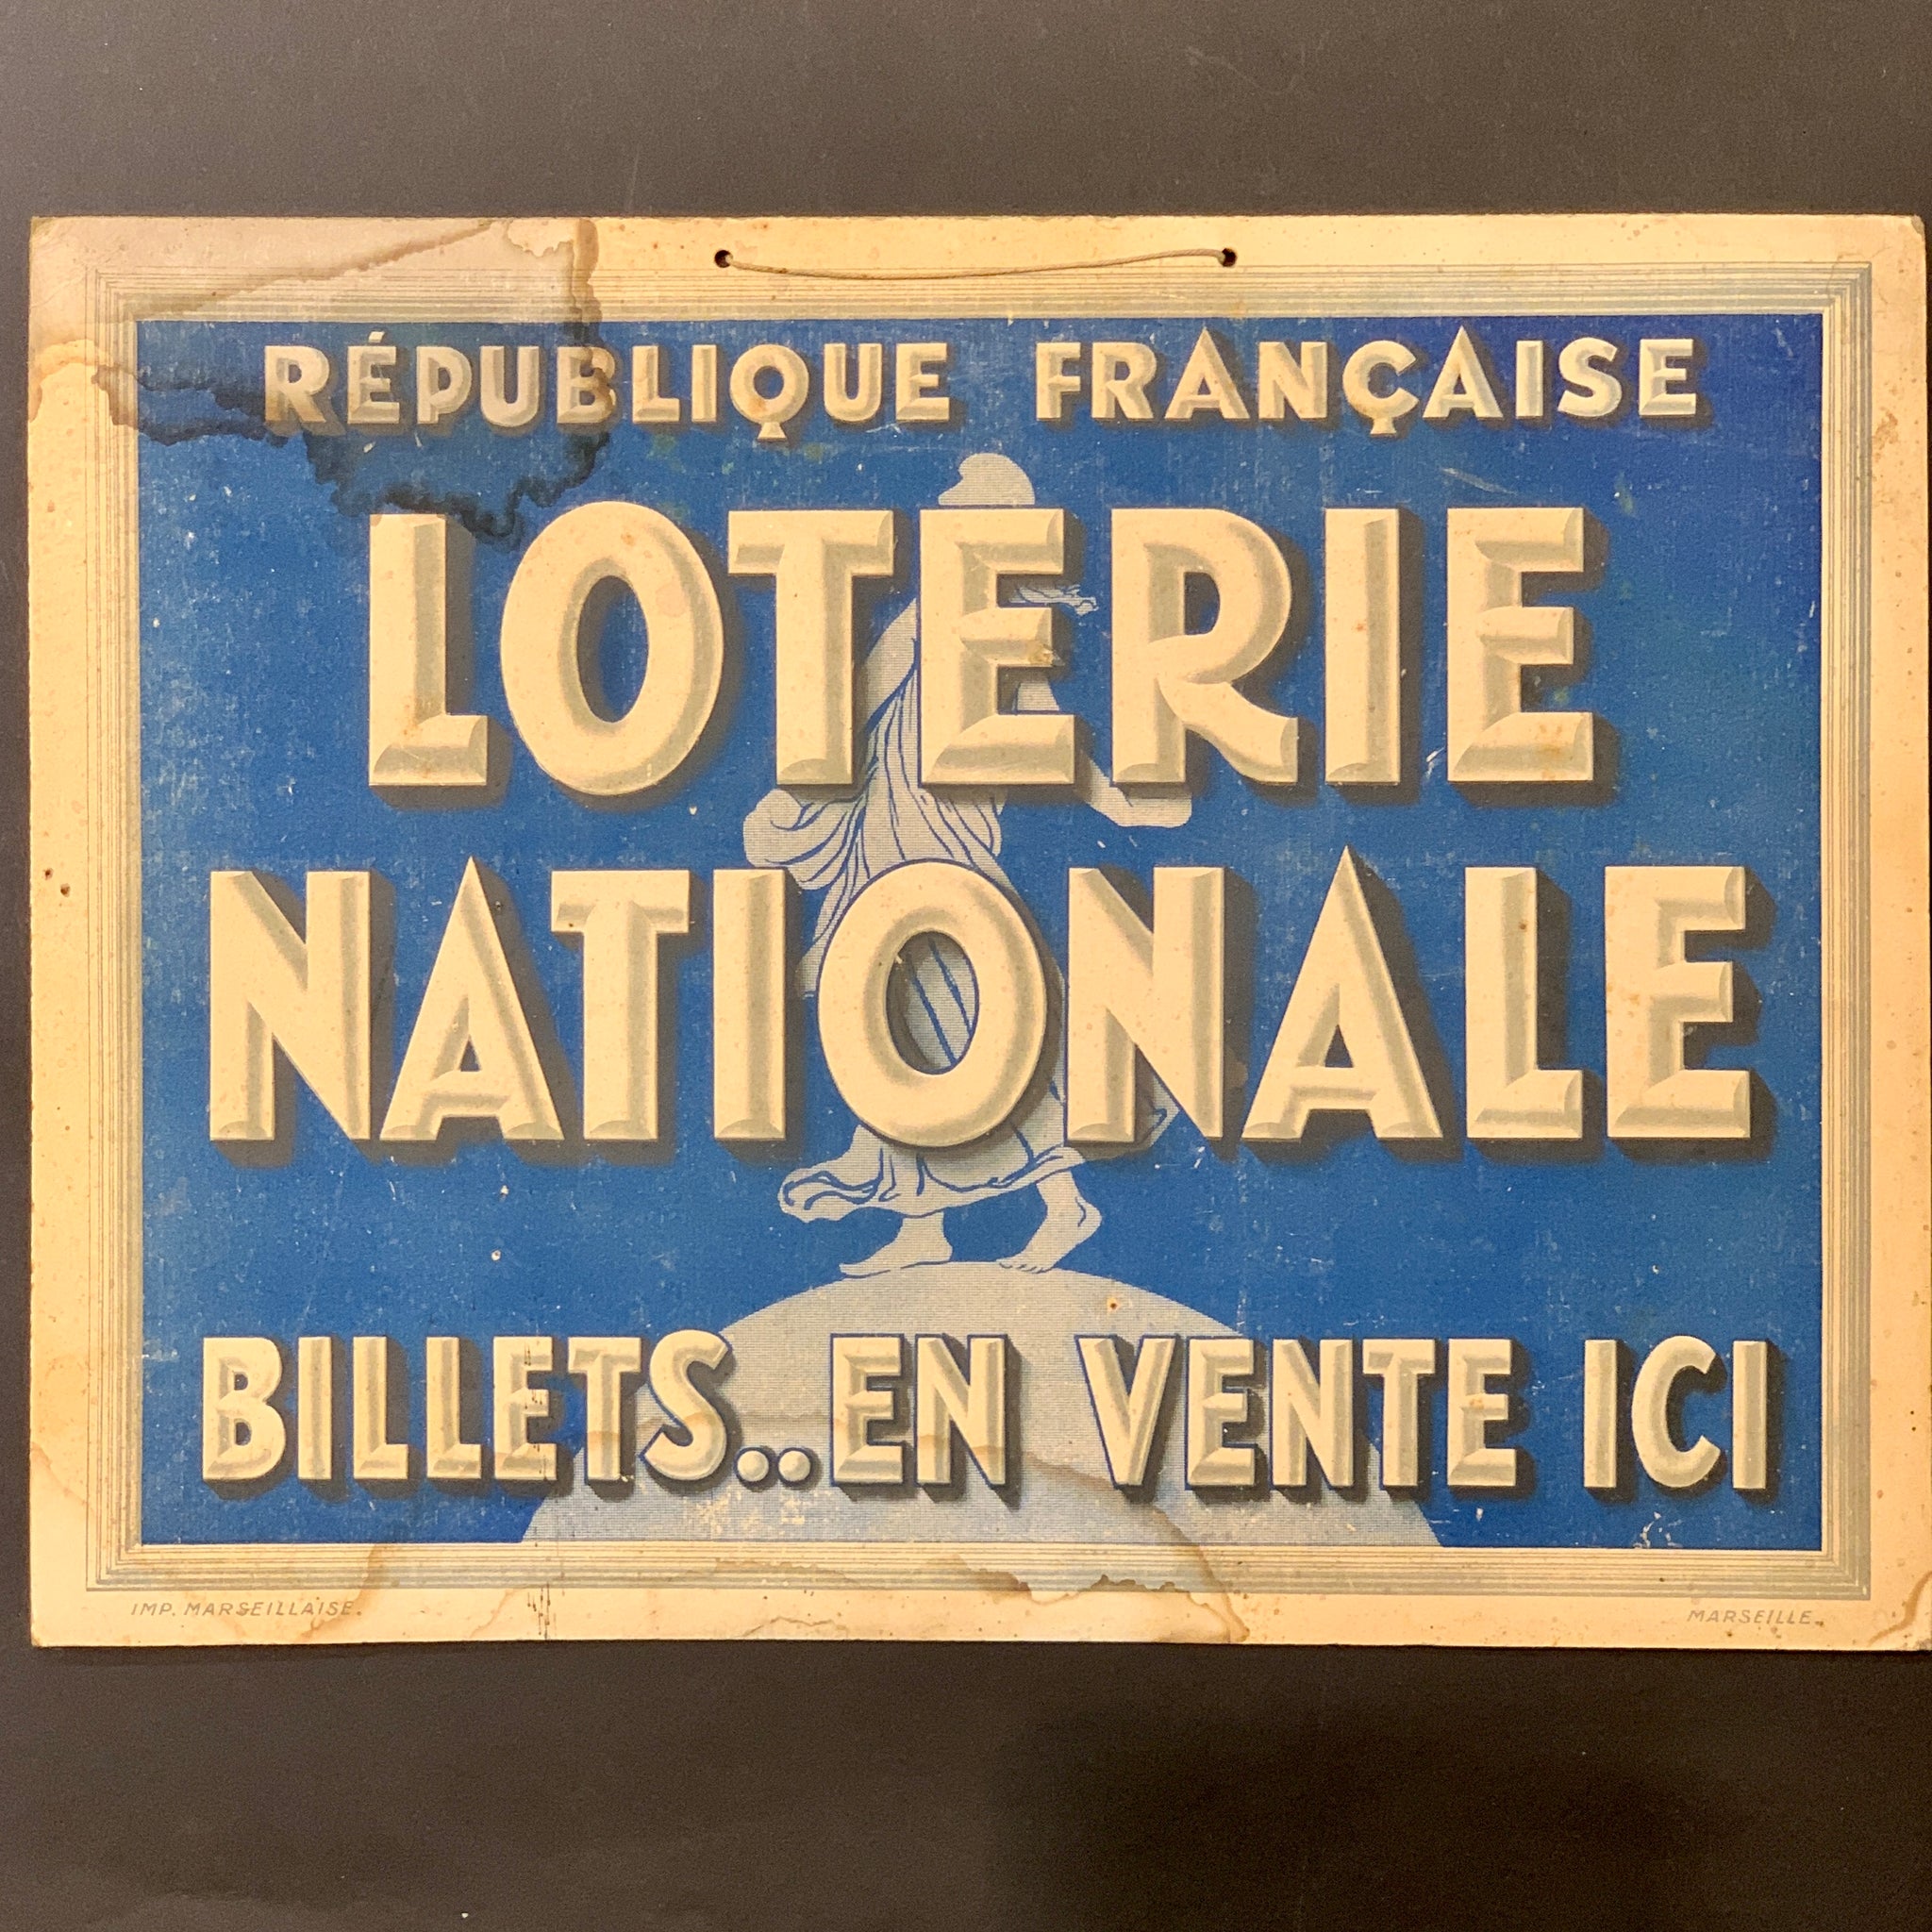 Fransk “Loterie Nationale” skilt, fra 1940erne.